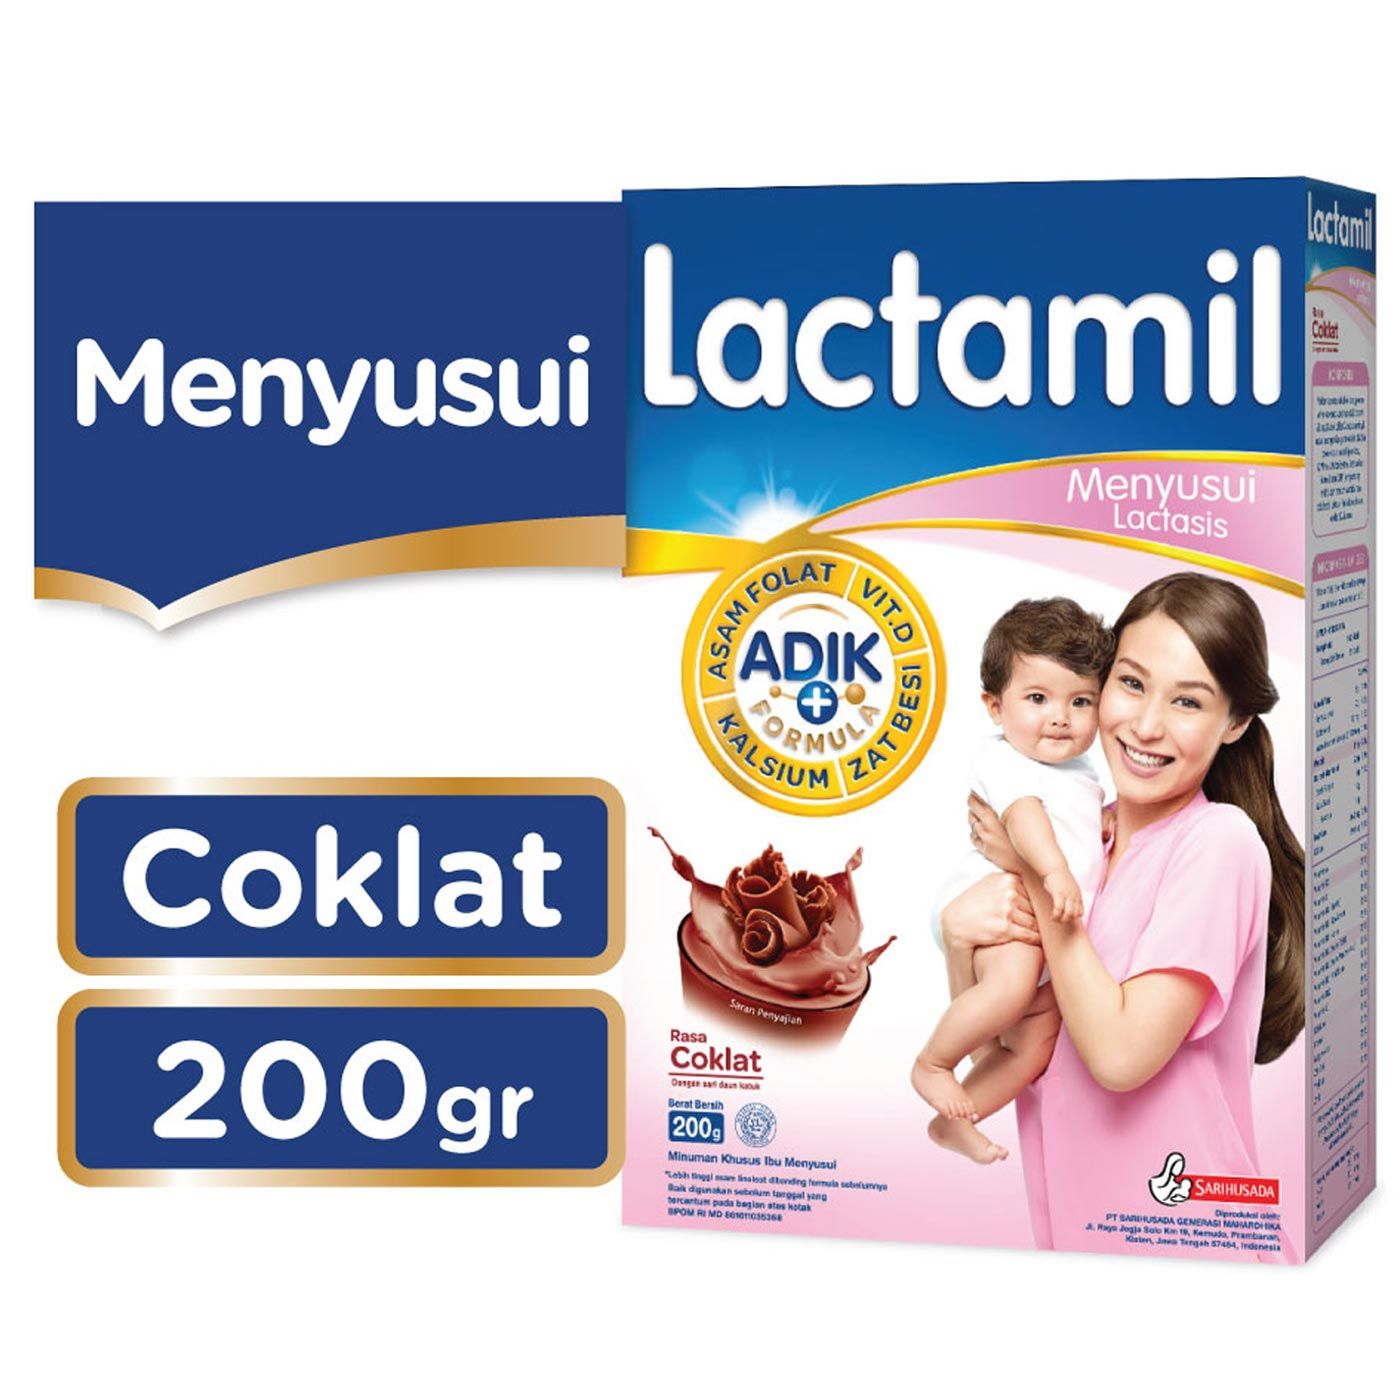 Lactamil Lactasis Coklat 200gr Box - 1